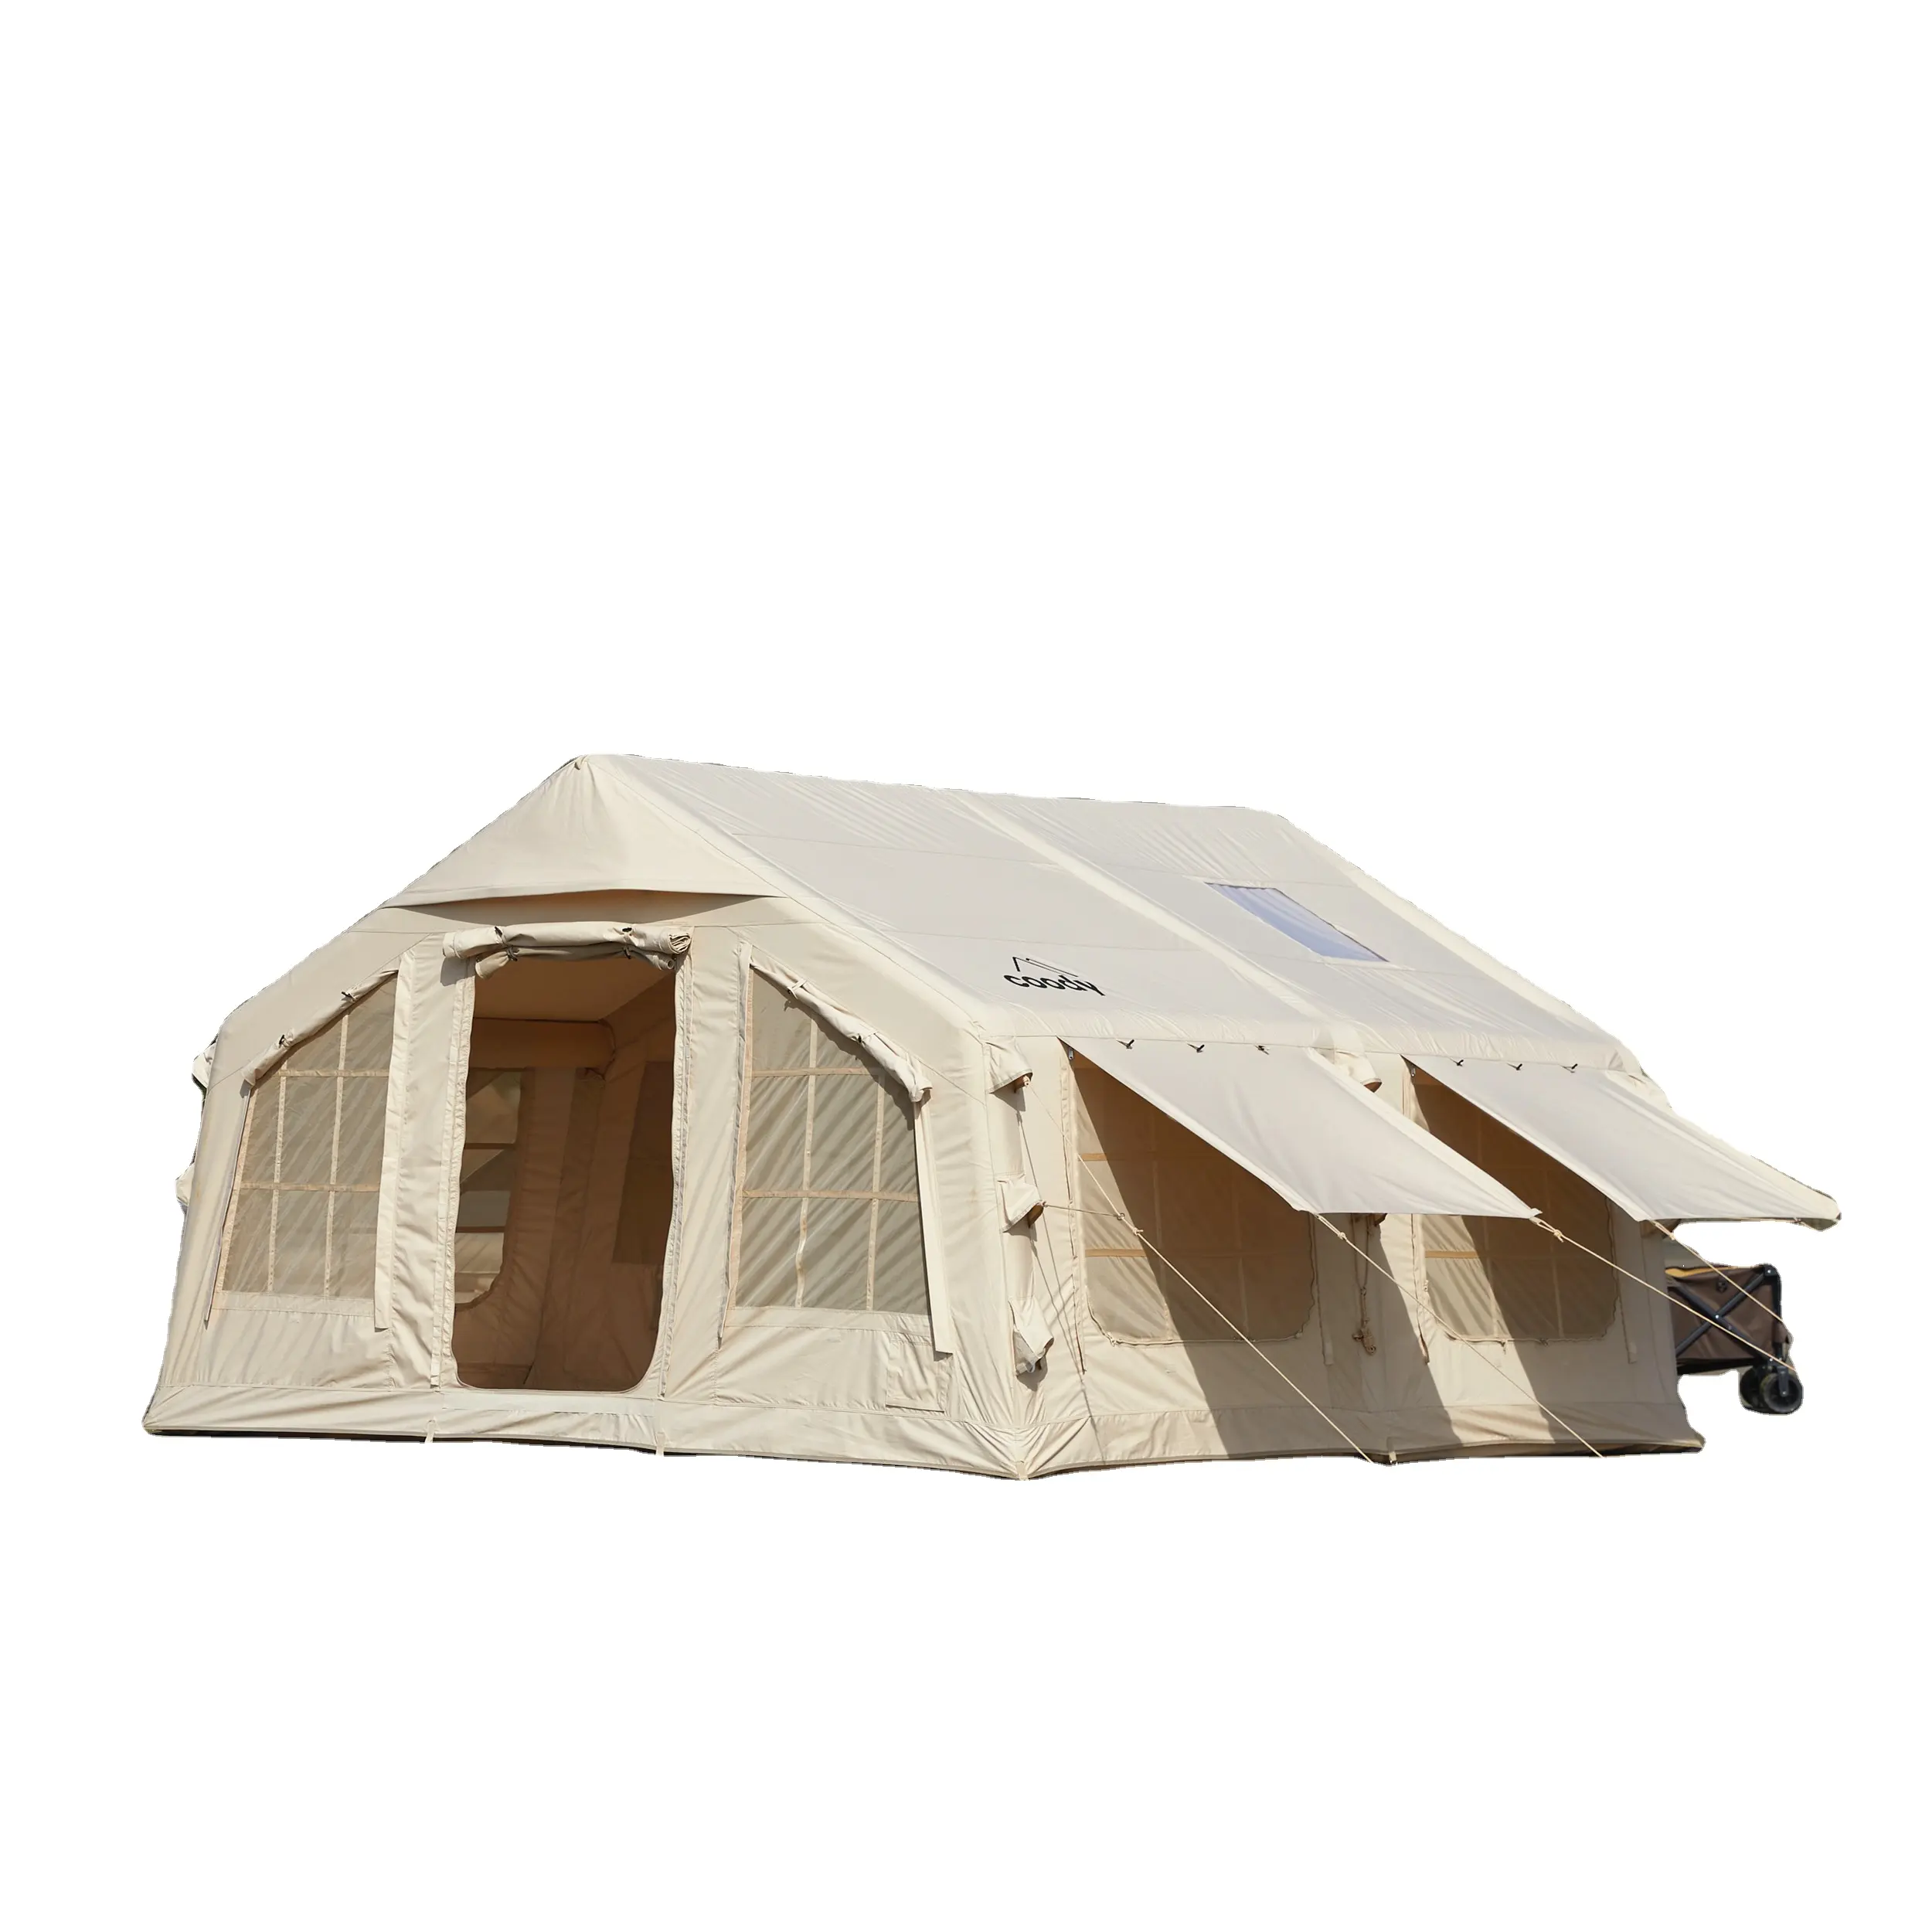 Coody China Manufacture Coody Air Tent防水UVプロテクション13.68キャンプテントCoody Glampインフレータブルテント